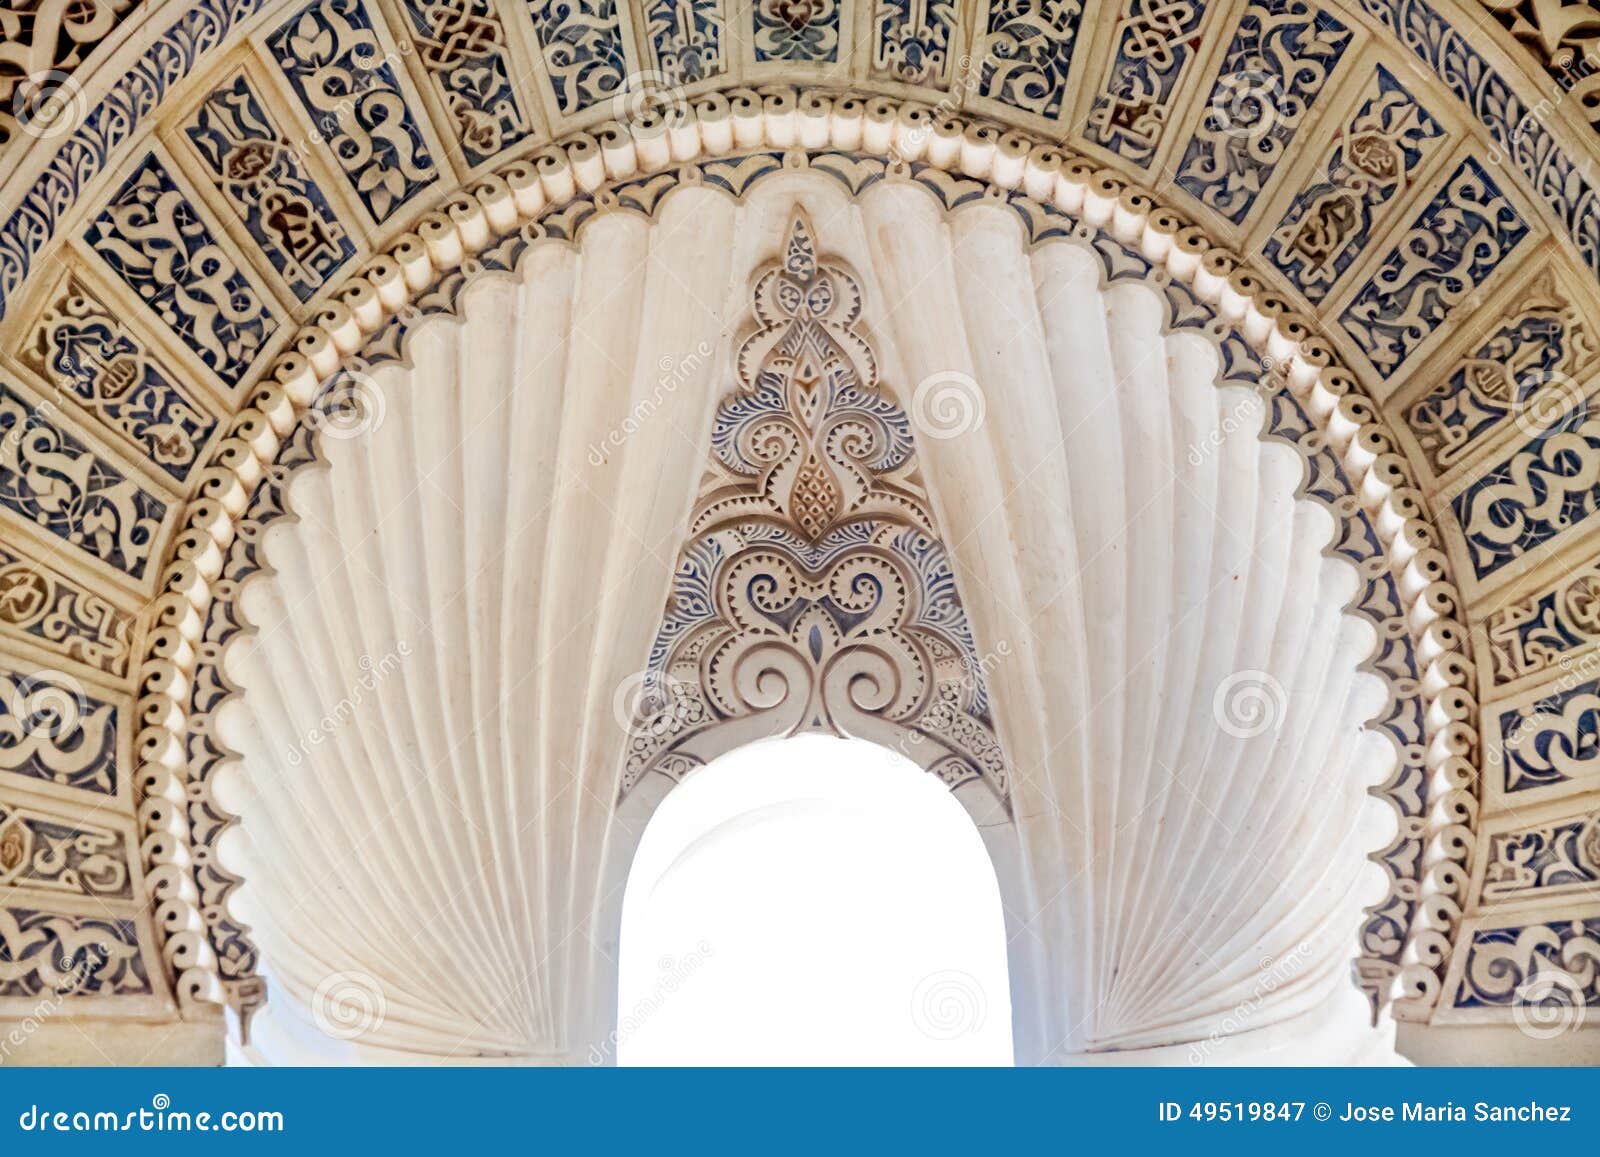 islamic art decorated arch window